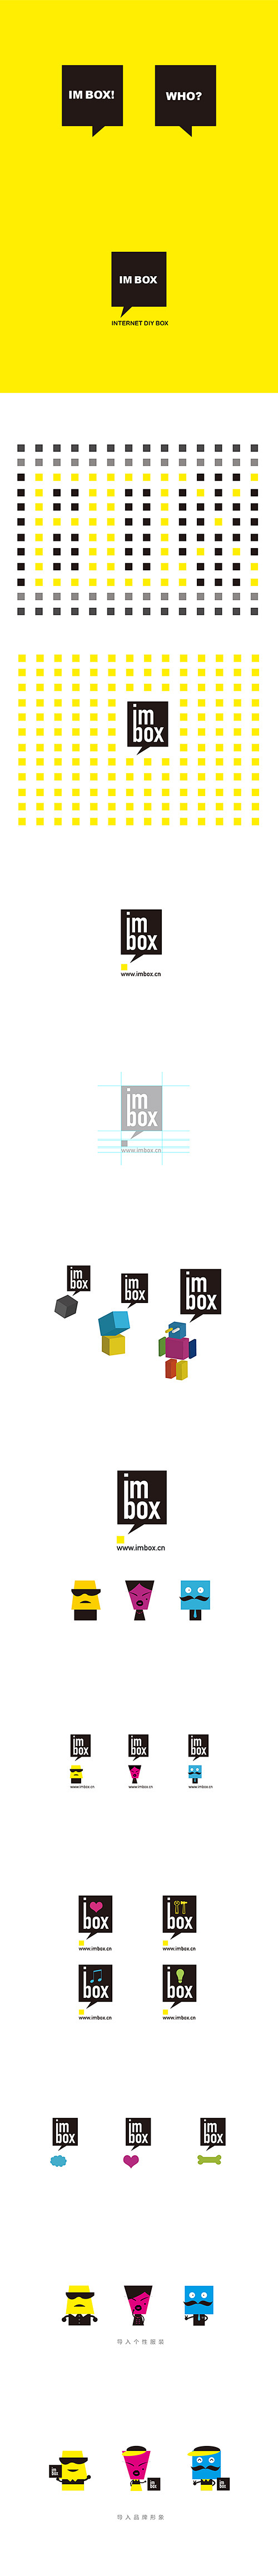 imbox是xx包装公司准备搭建的一个全...